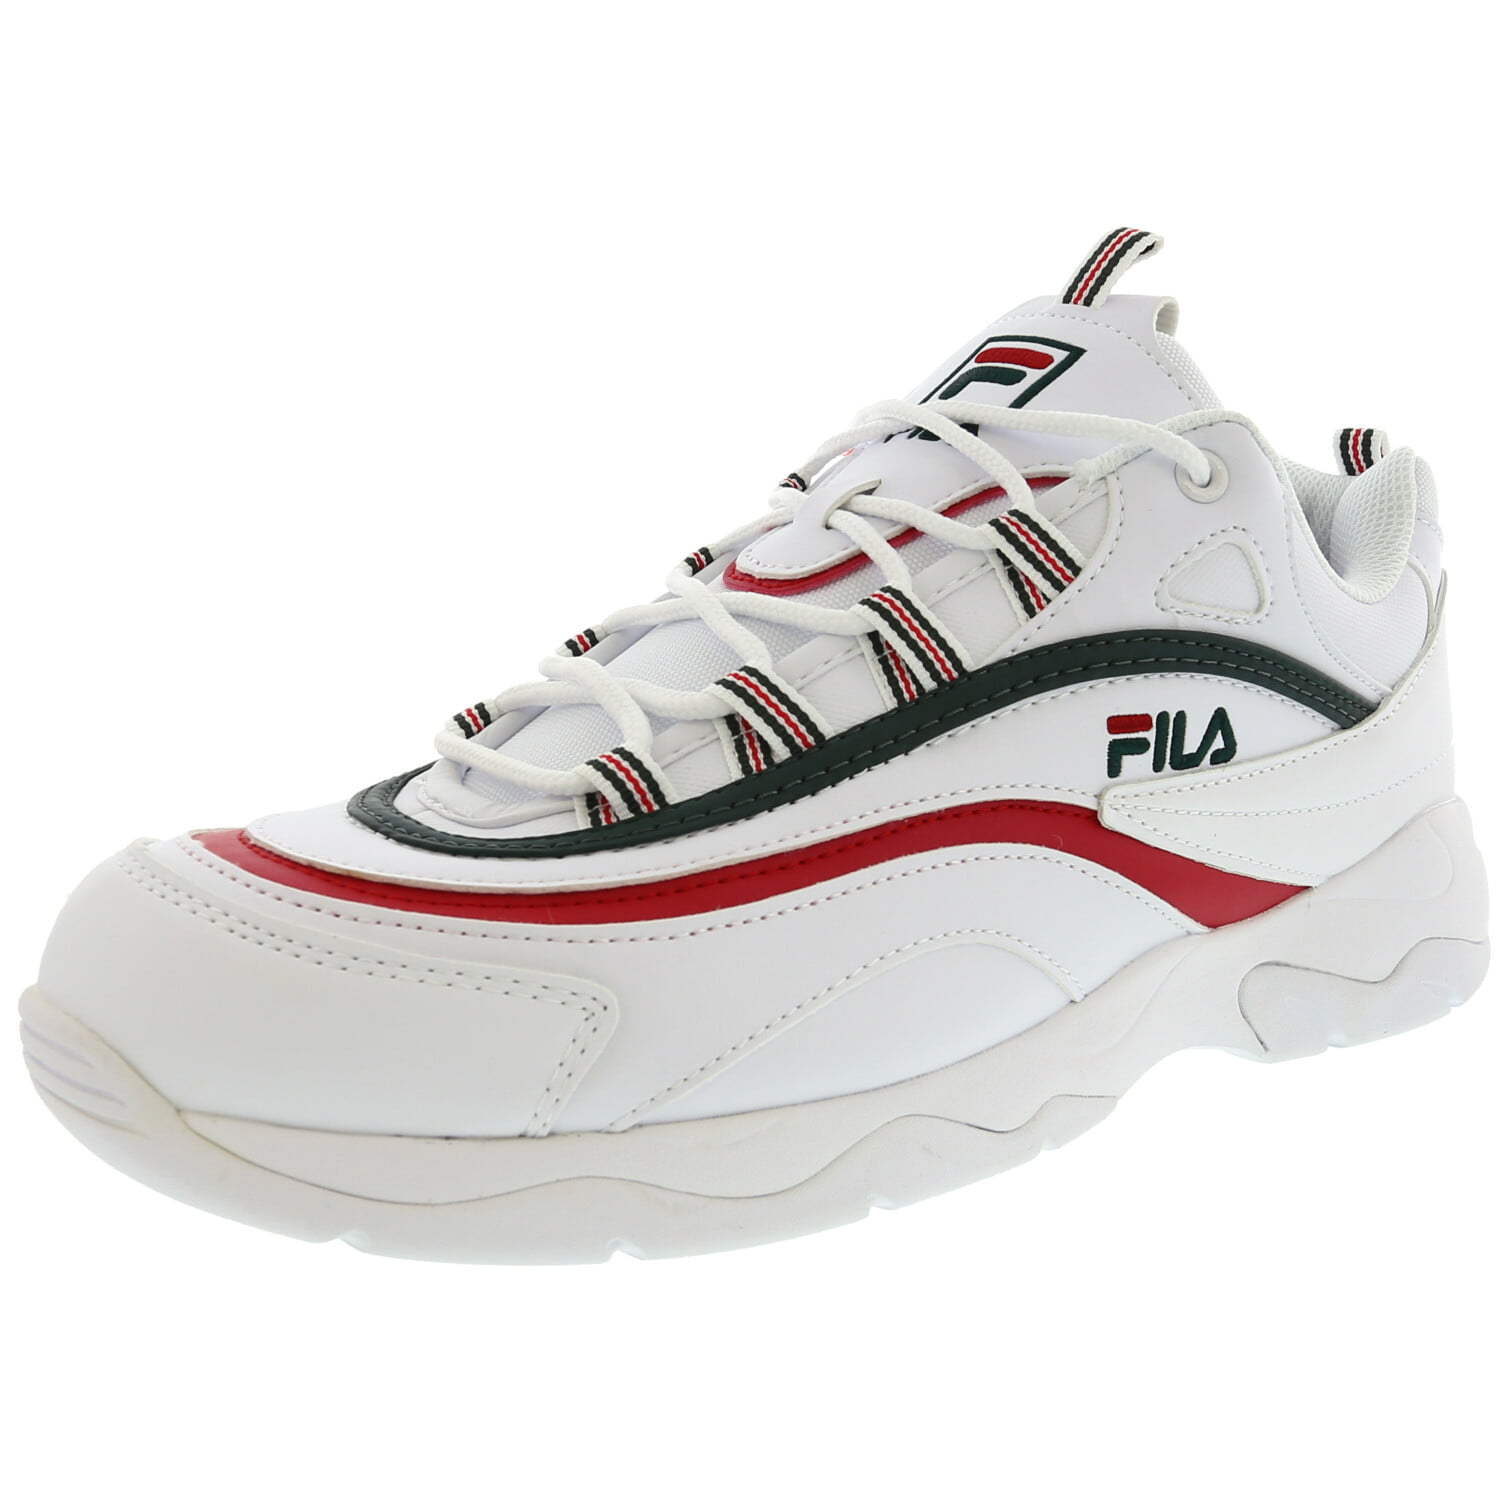 Fila White / Red Sneaker - 12M - Walmart.com